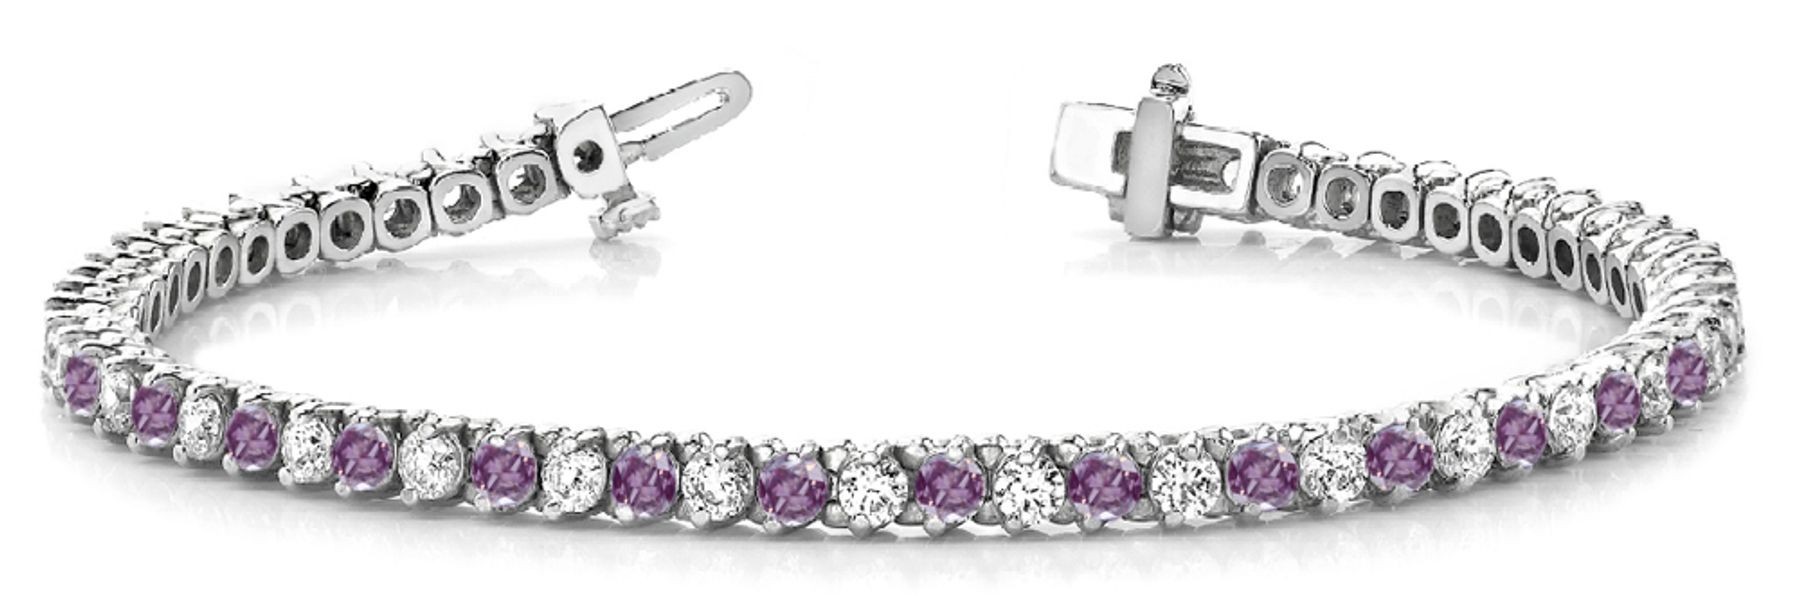 Colored Diamond Bracelets: Pink Diamonds - Pink Colored Diamond Bracelet